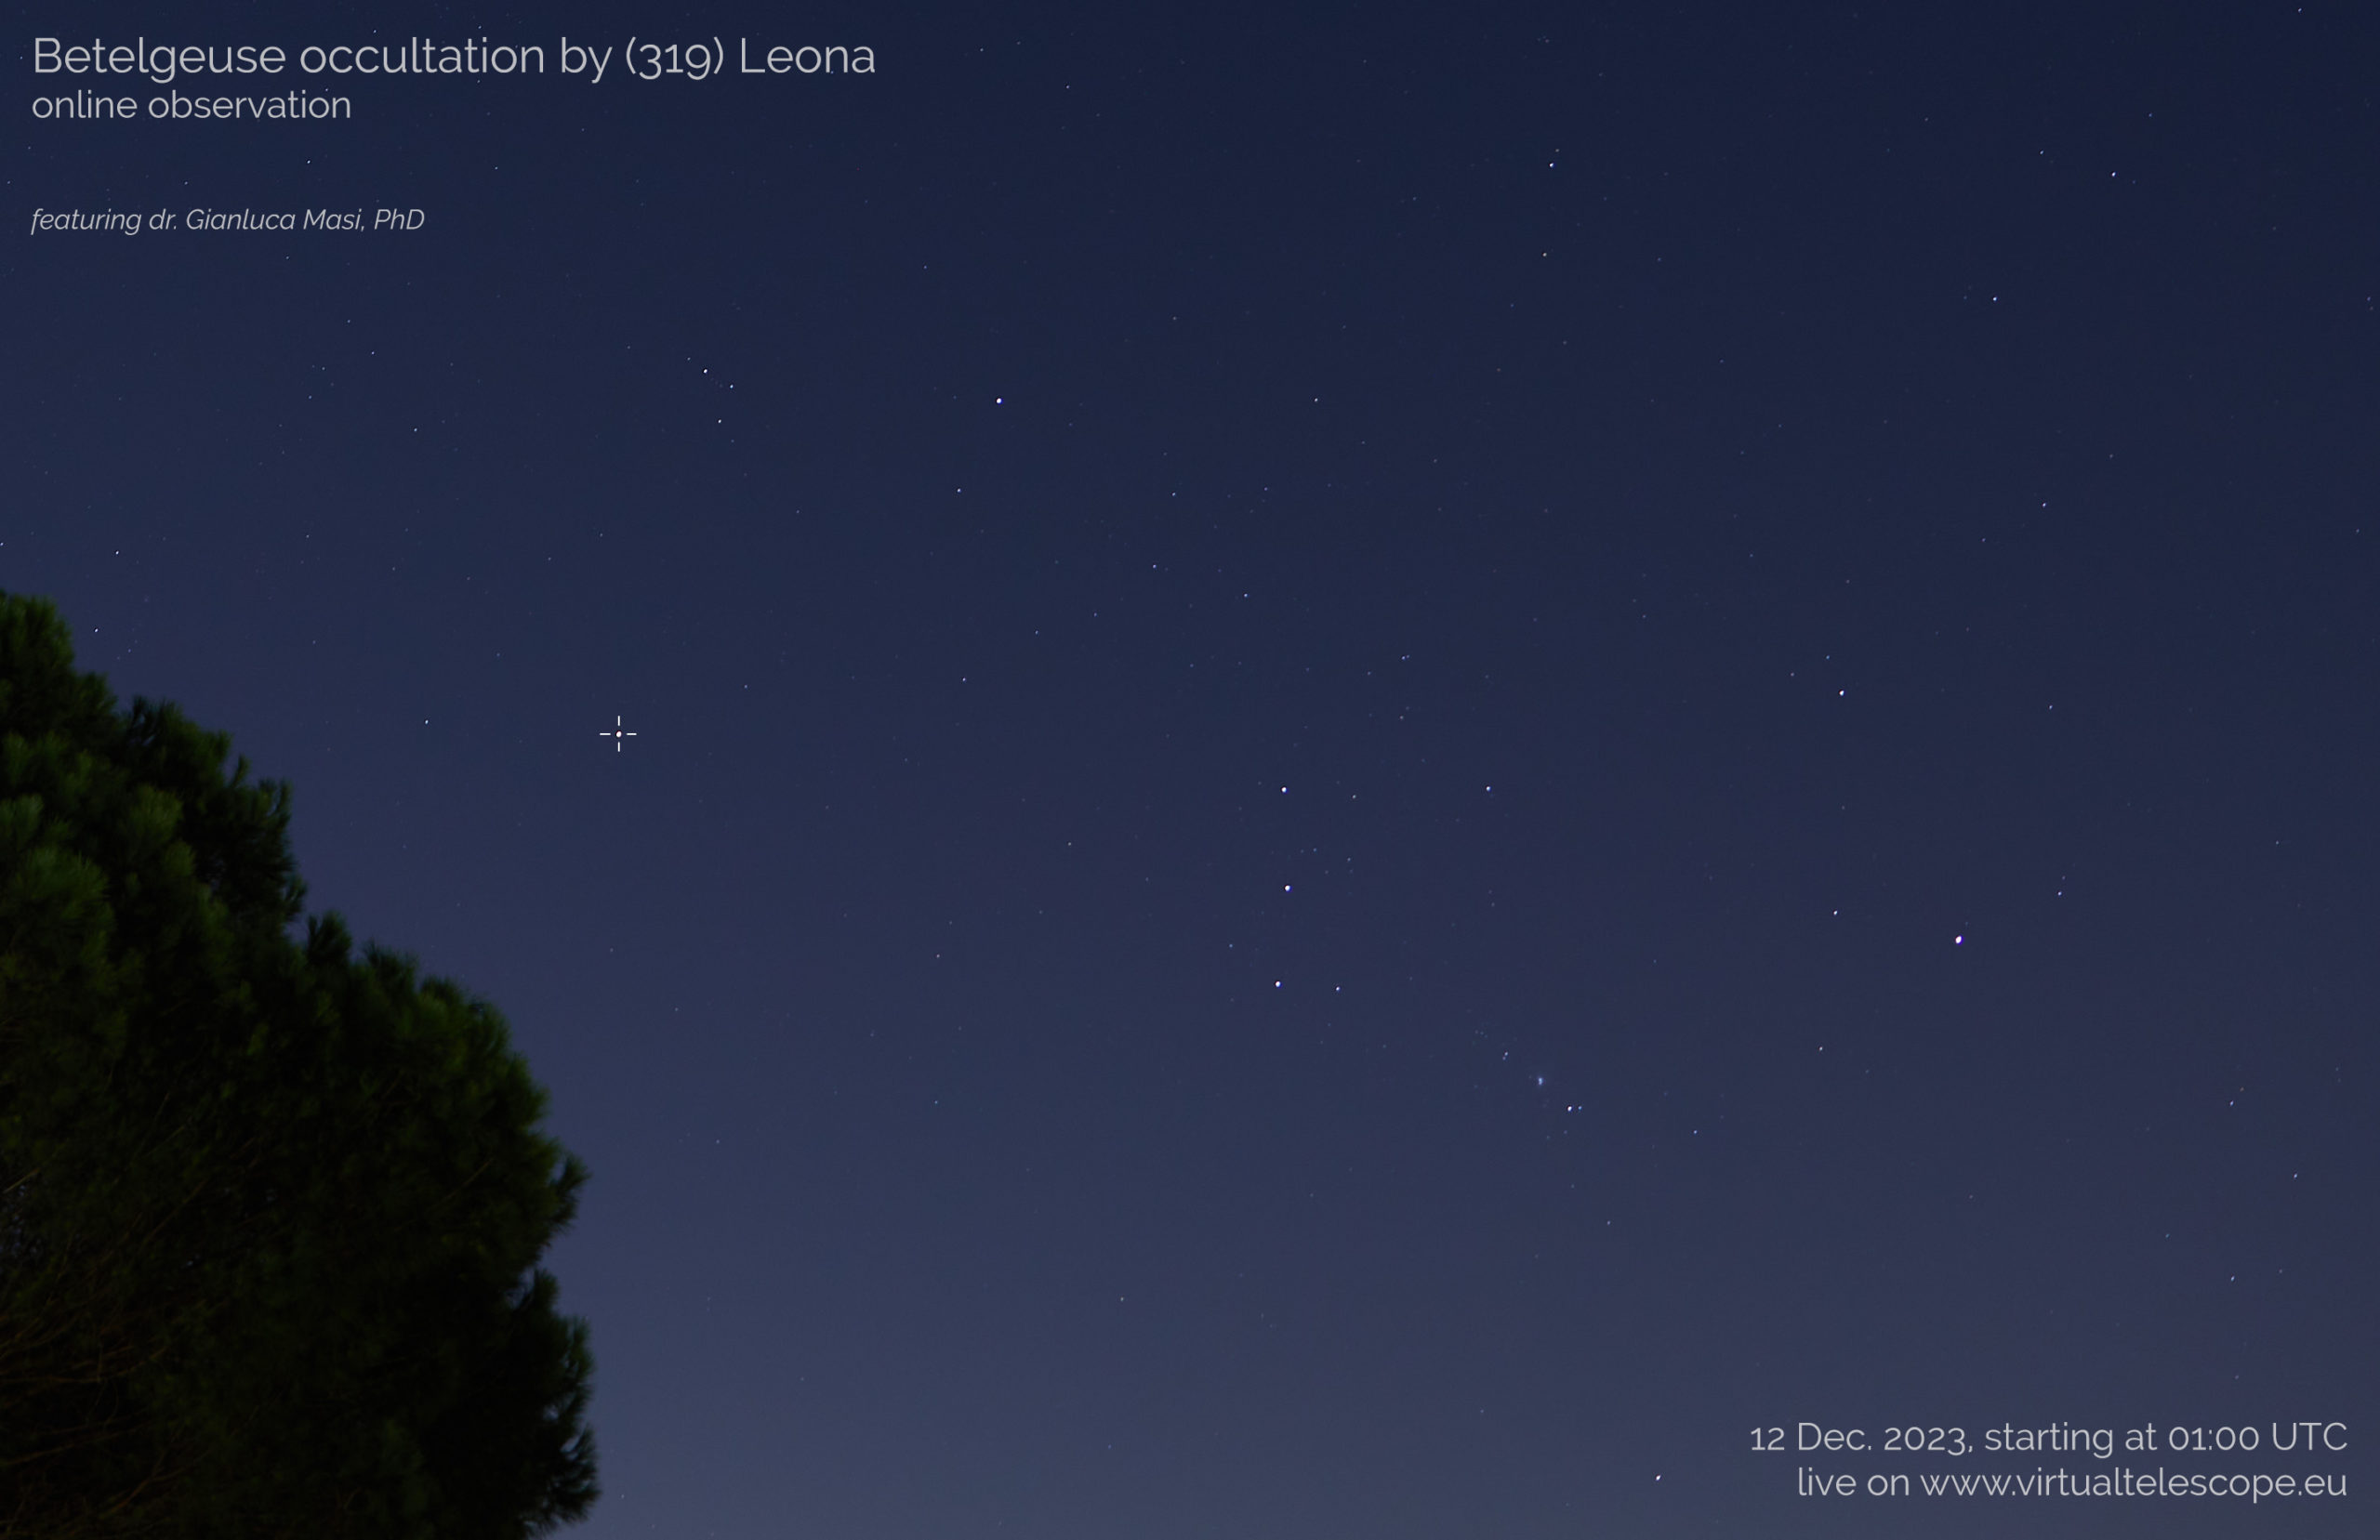 Ocultación extremadamente rara de Betelgeuse por el asteroide (319) Leona: Evento en línea – 12 de diciembre de 2023